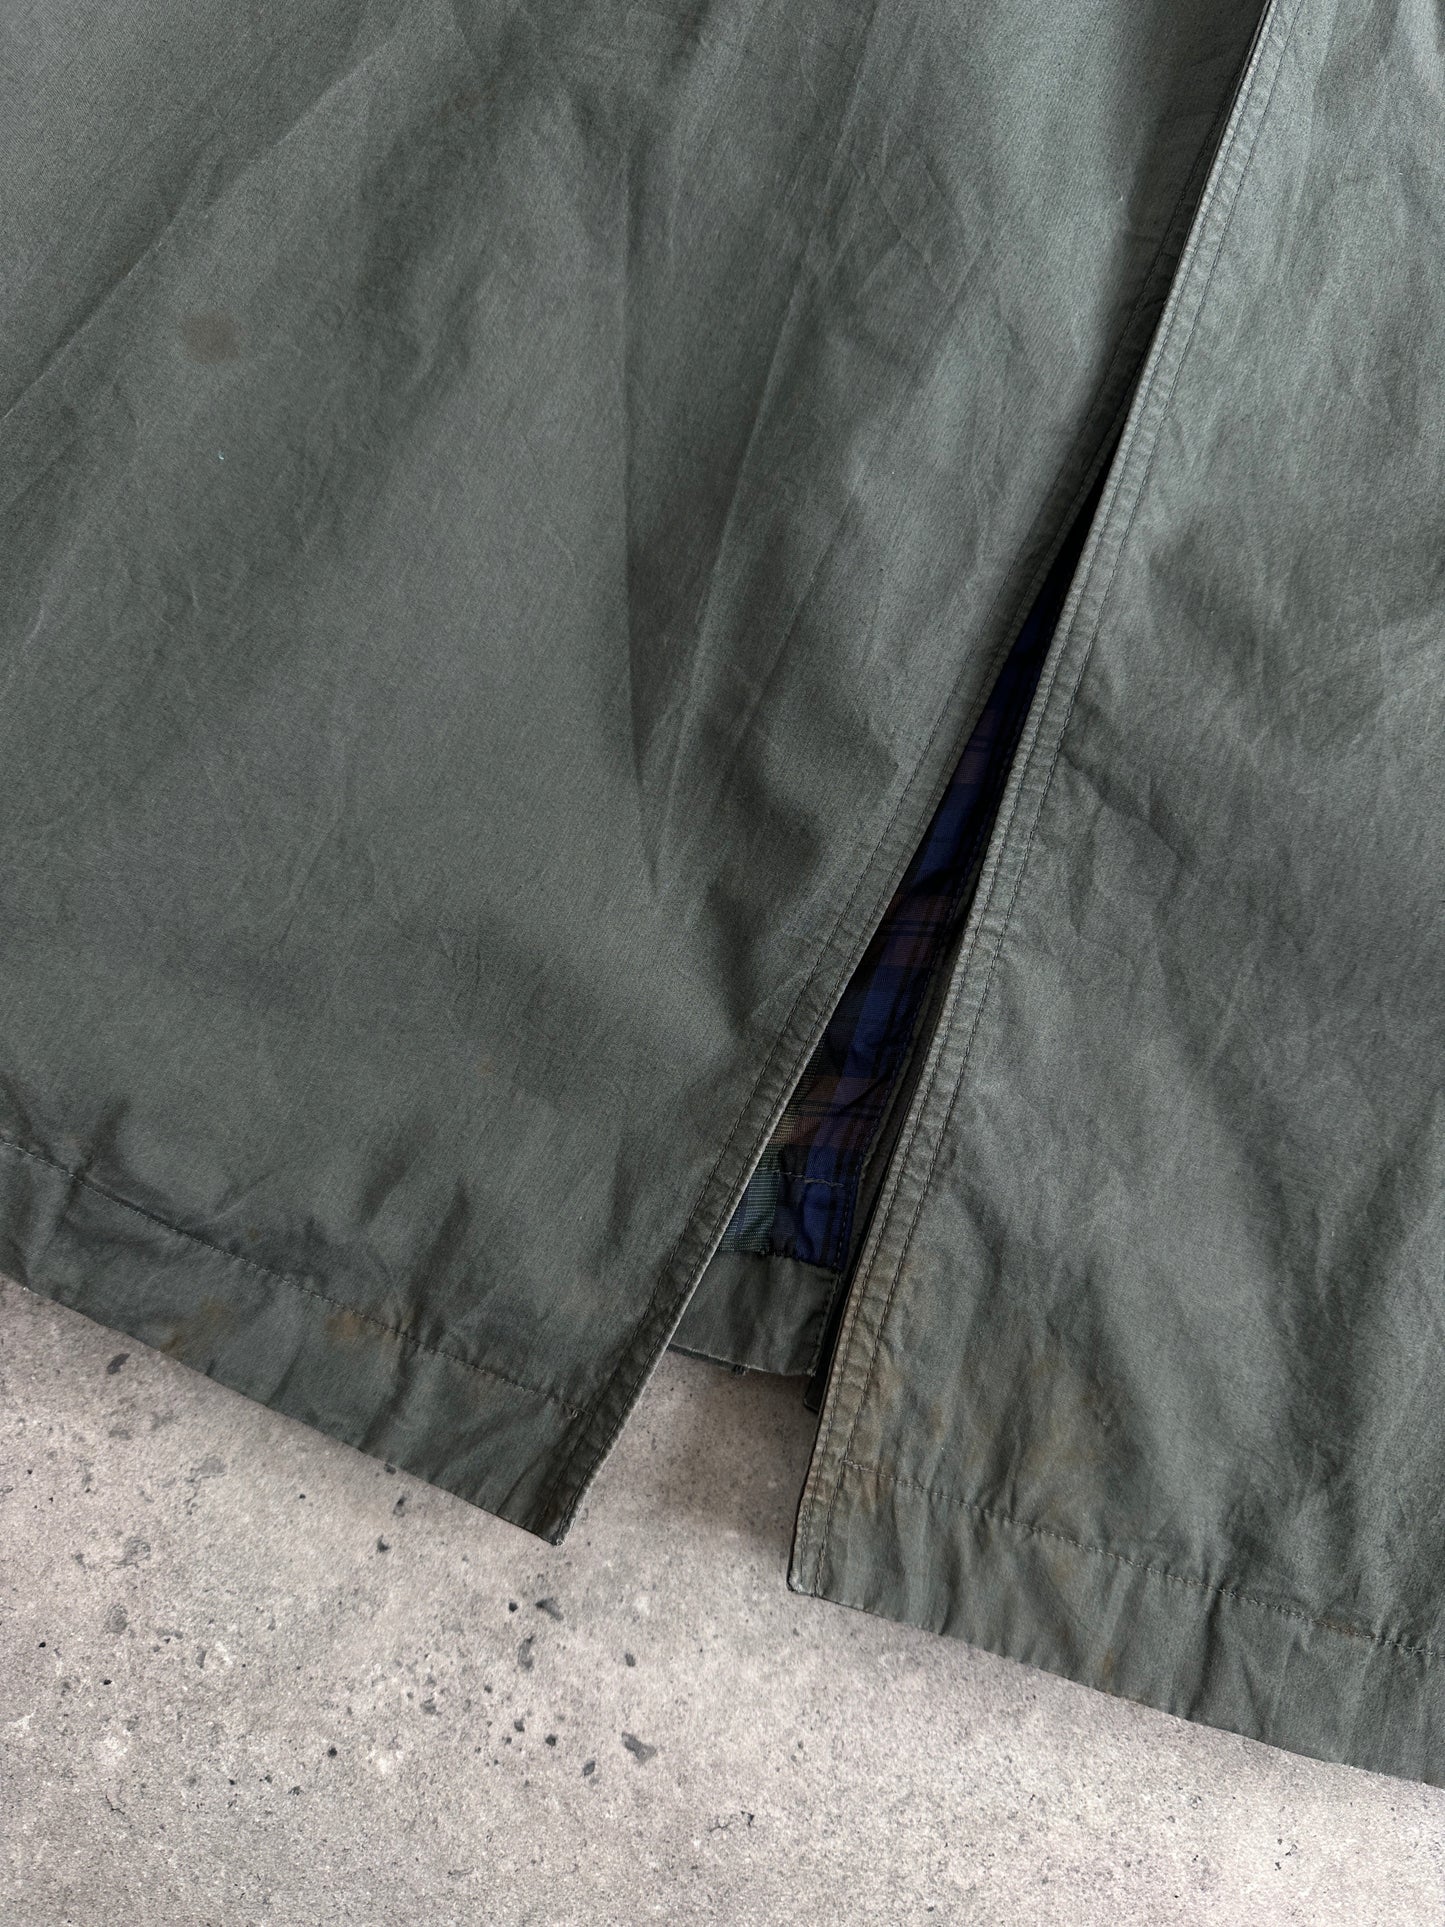 Yves Saint Laurent Pure Cotton Concealed Placket Trench Coat - L